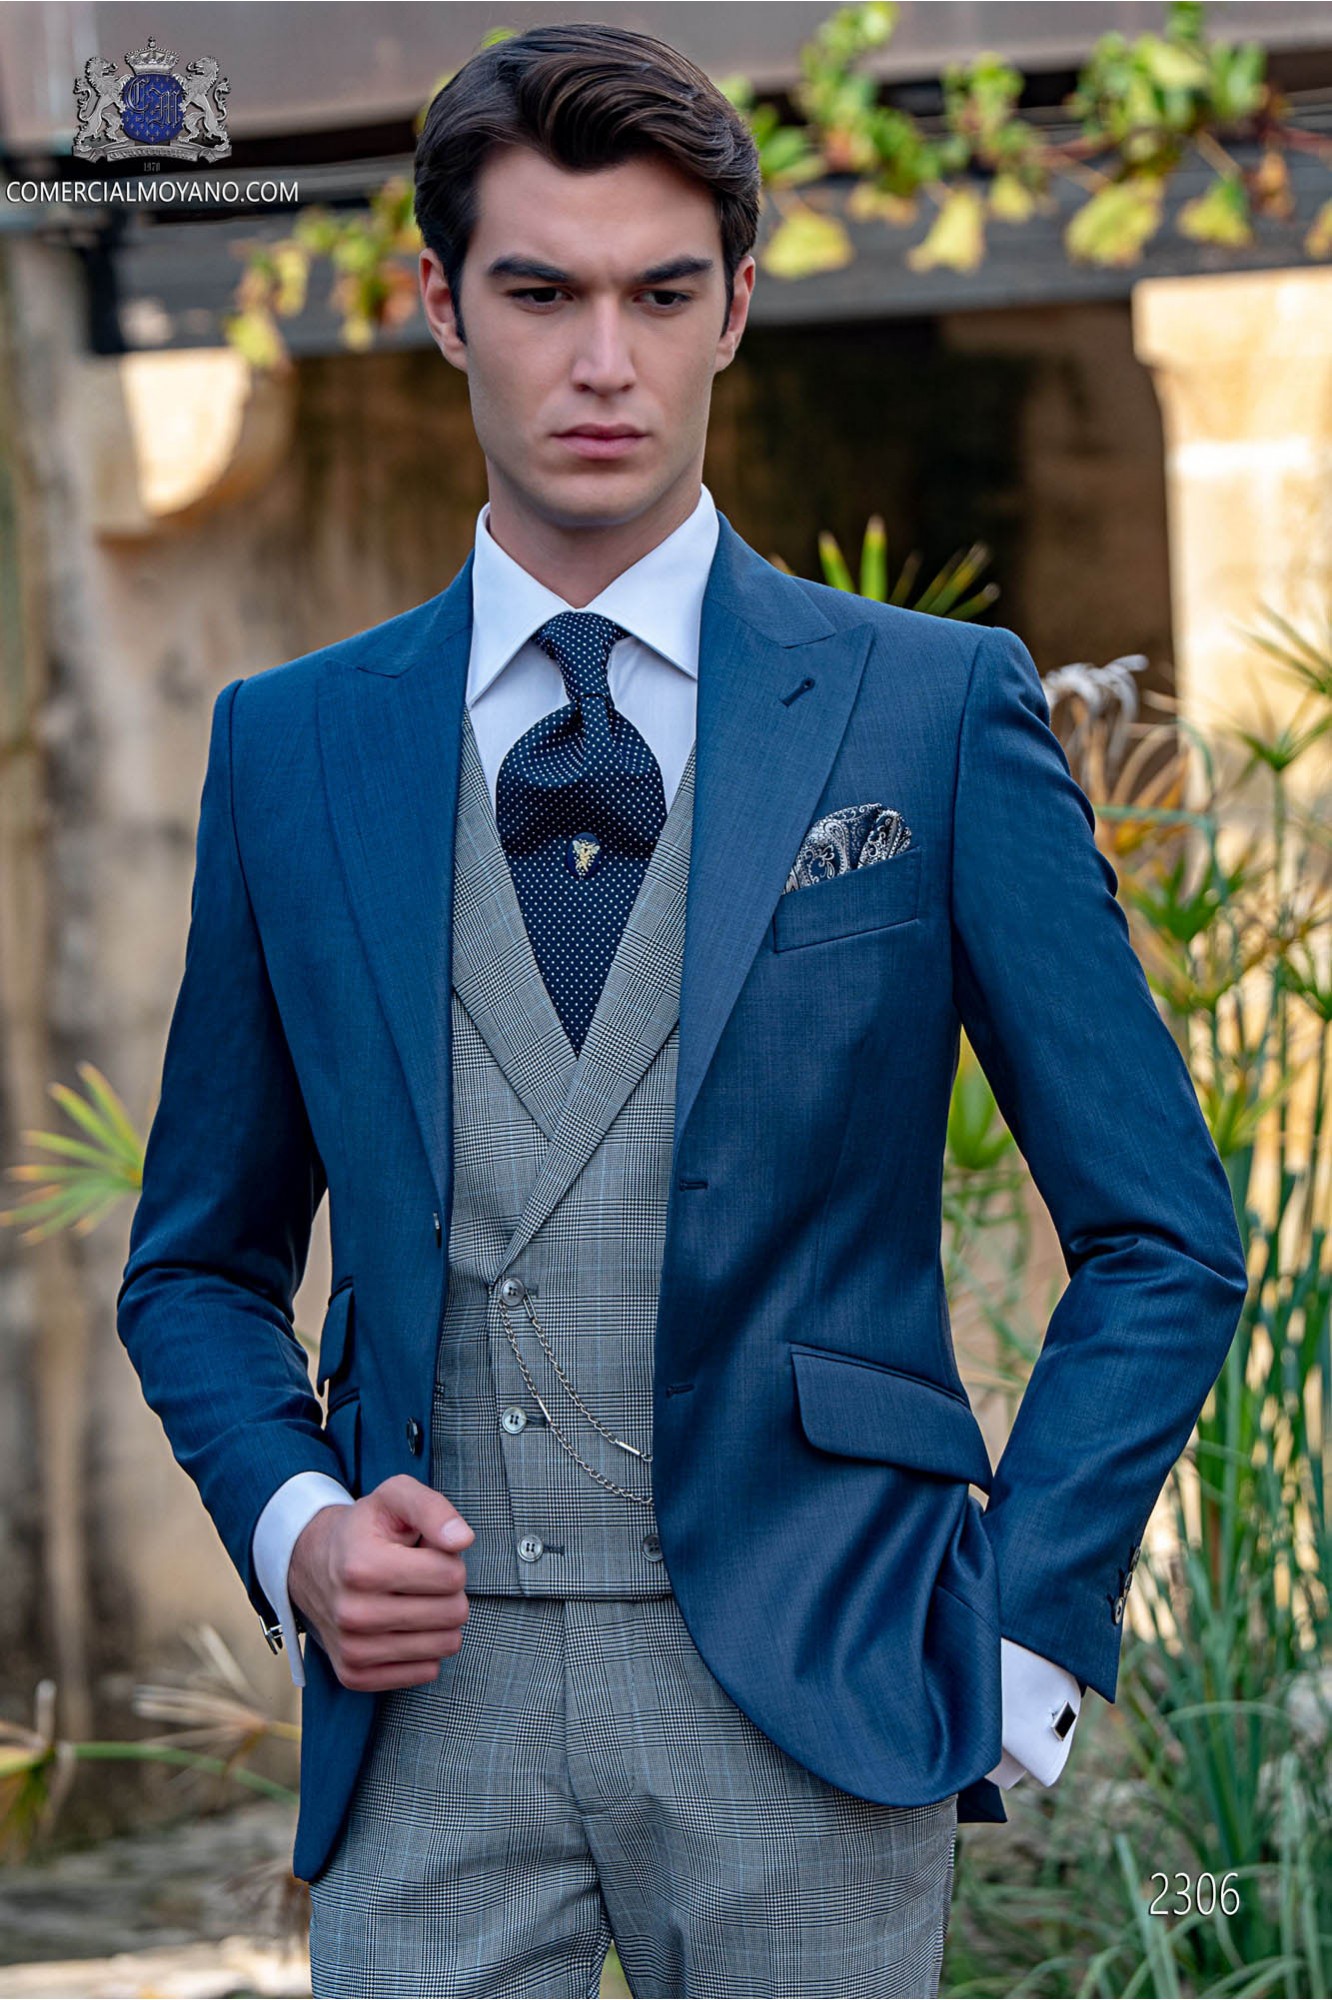 Tailored blue suit